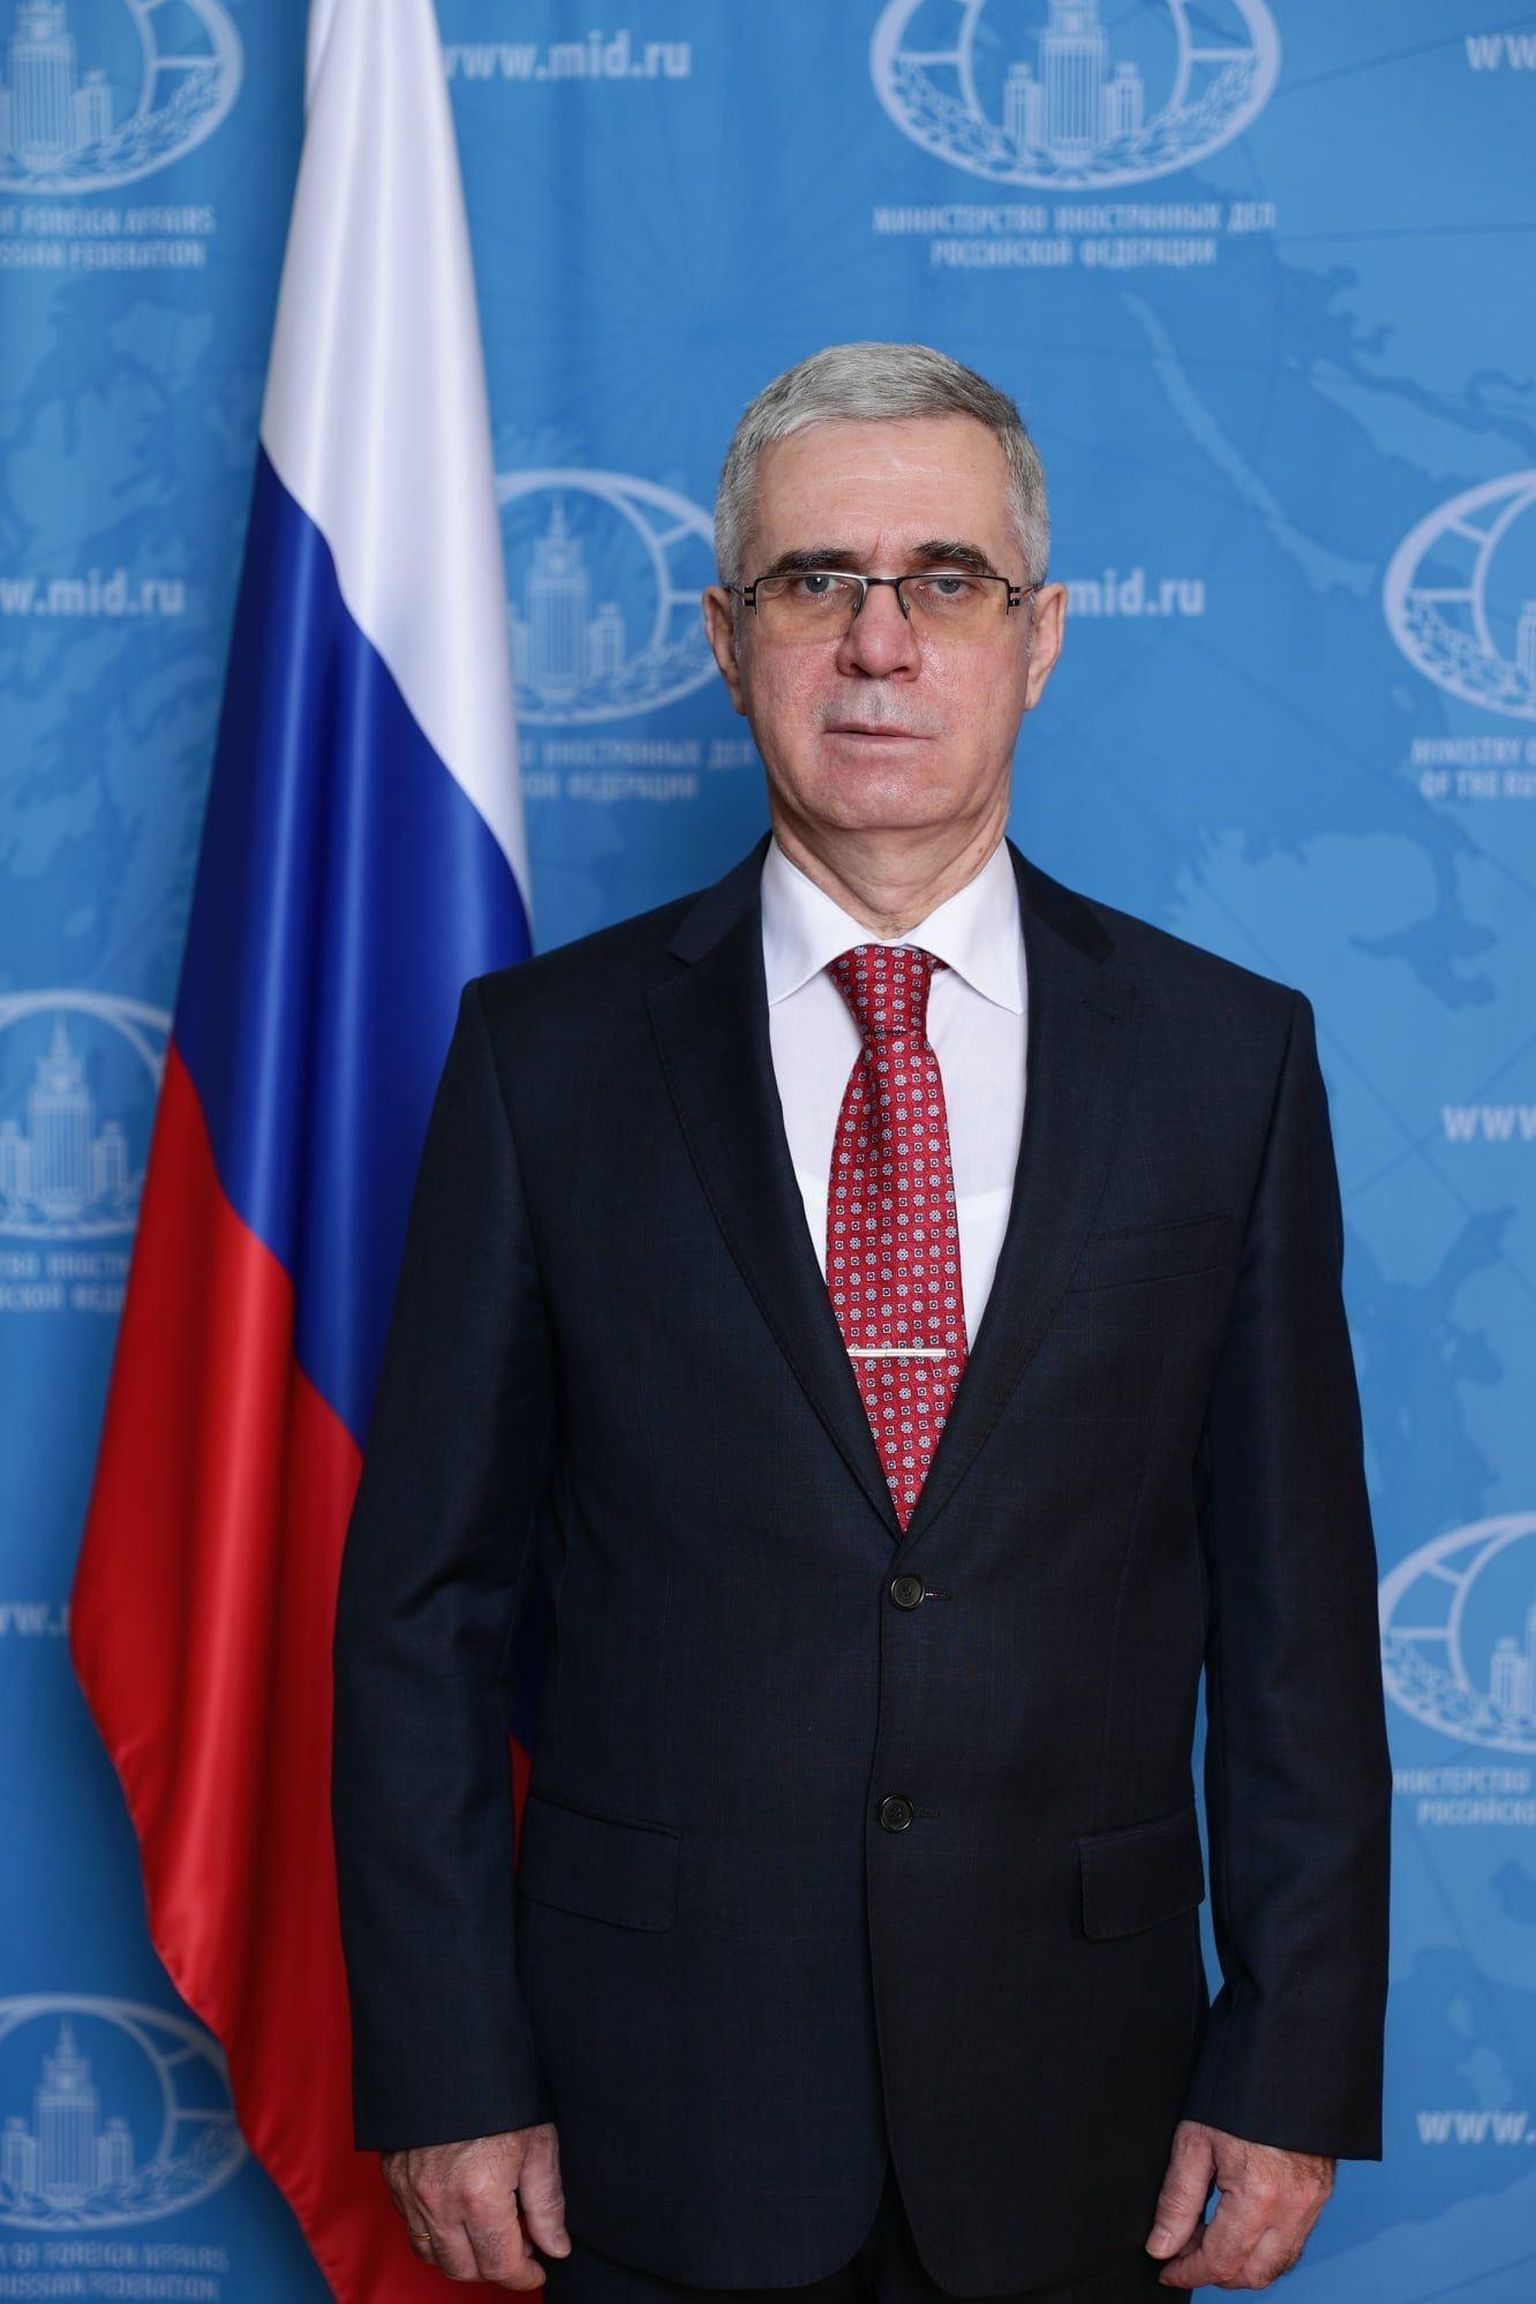 The Russian ambassador to Estonia, Vladimir Lipayev